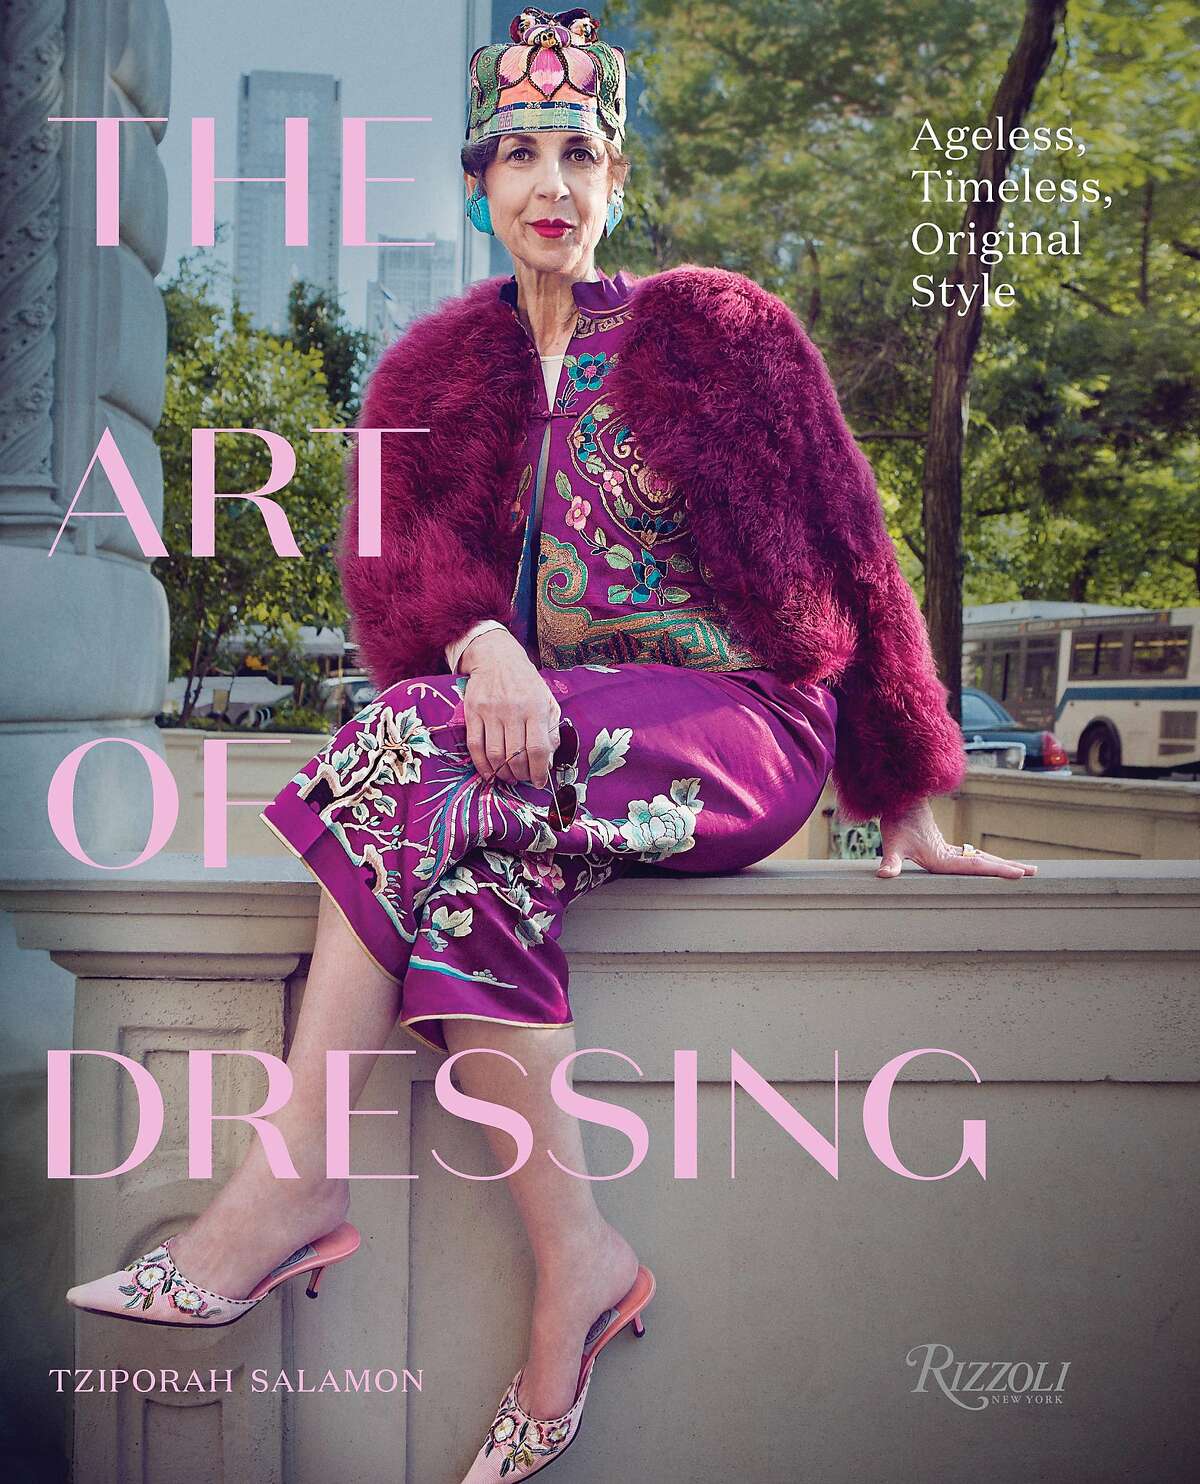 �The Art of Dressing� (Rizzoli, $60) by New York street style star Tziporah Salamon.